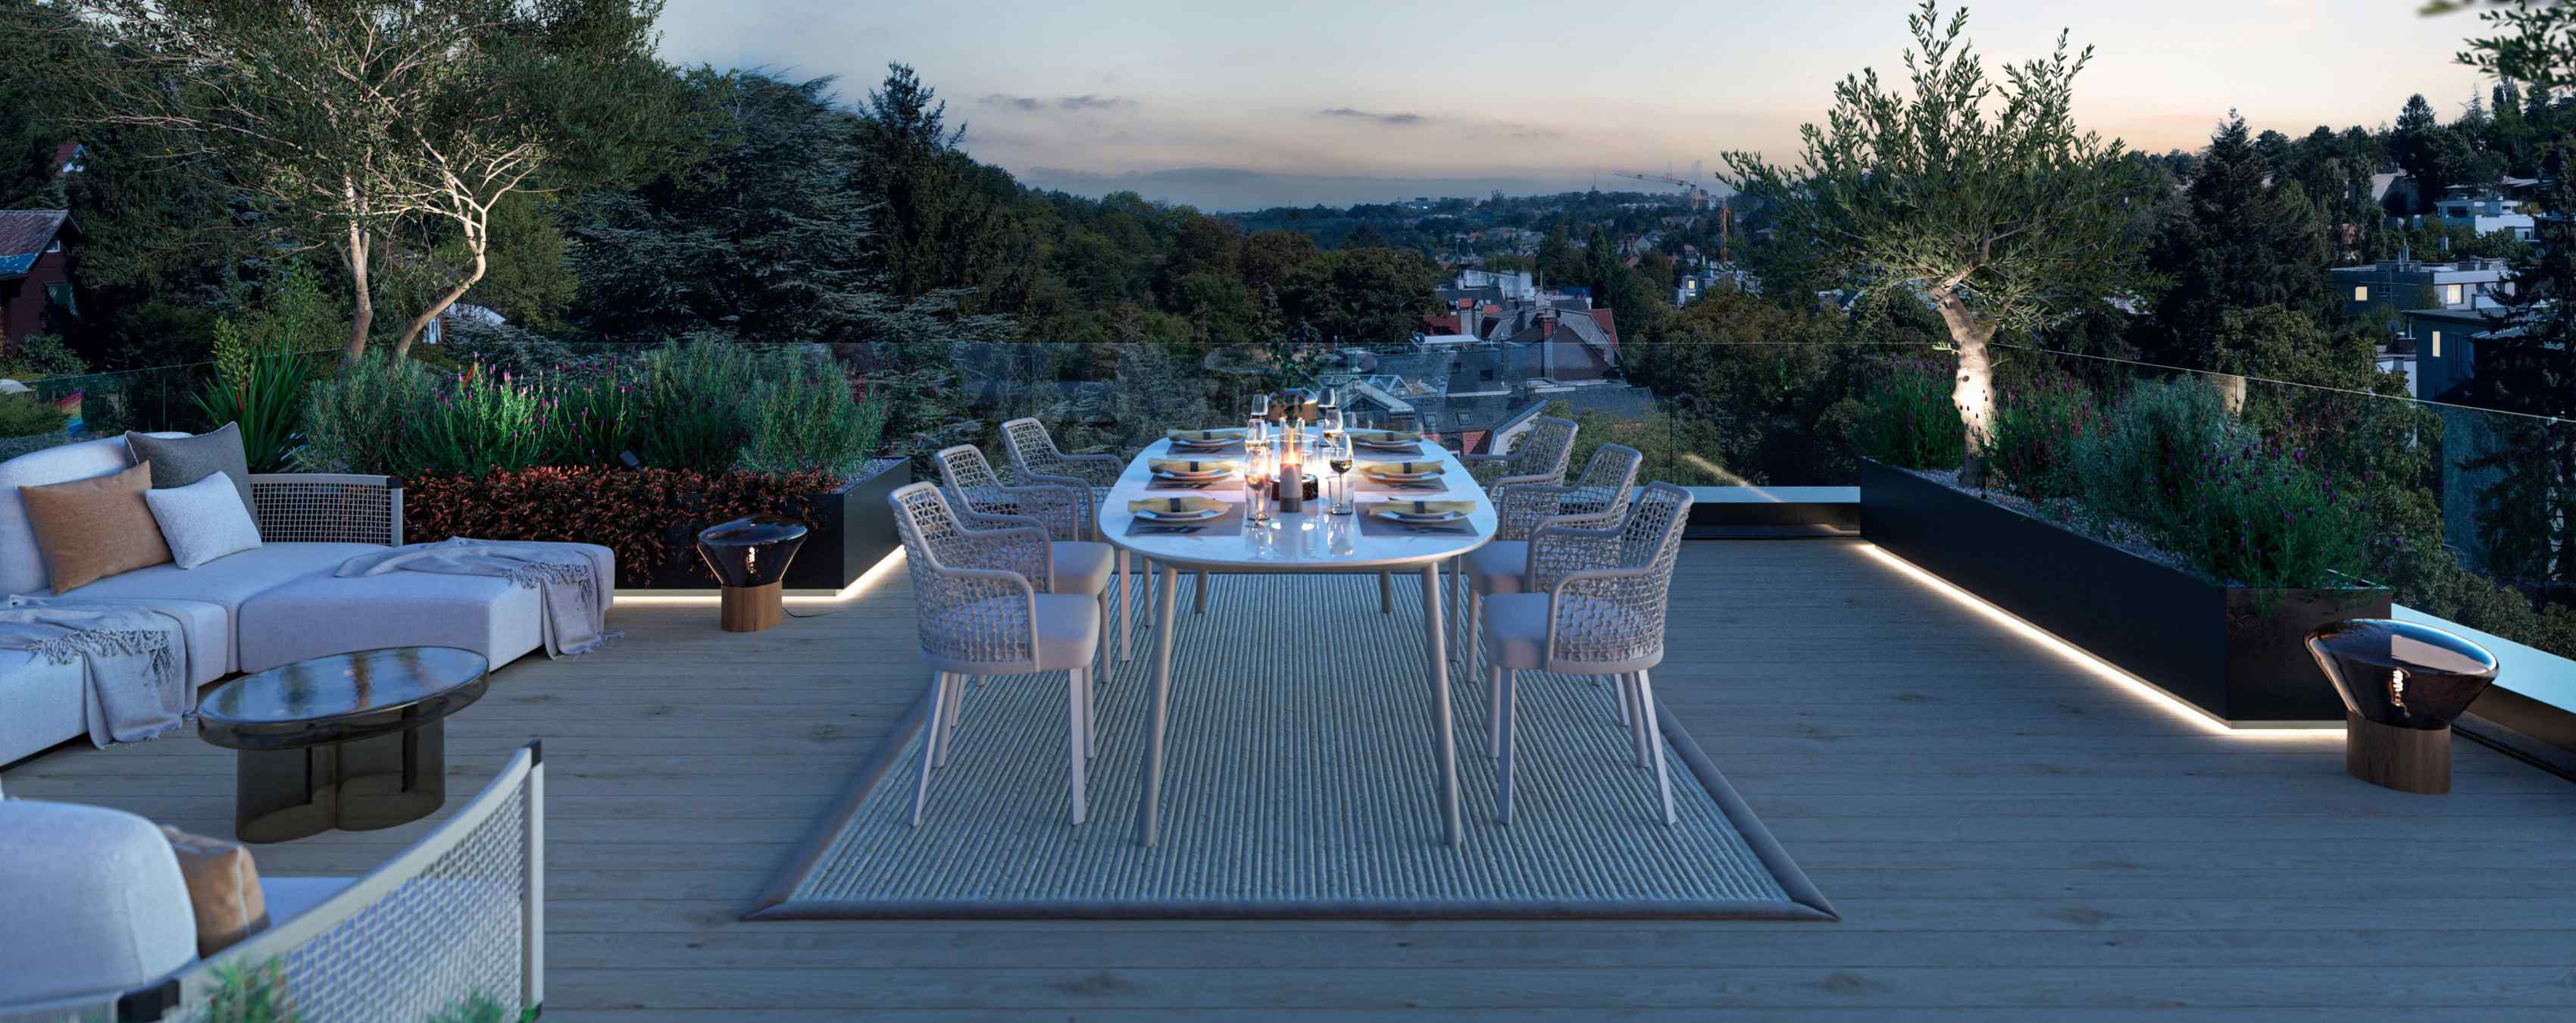 Foto: Penthouse mit großer Panorama-Terrasse